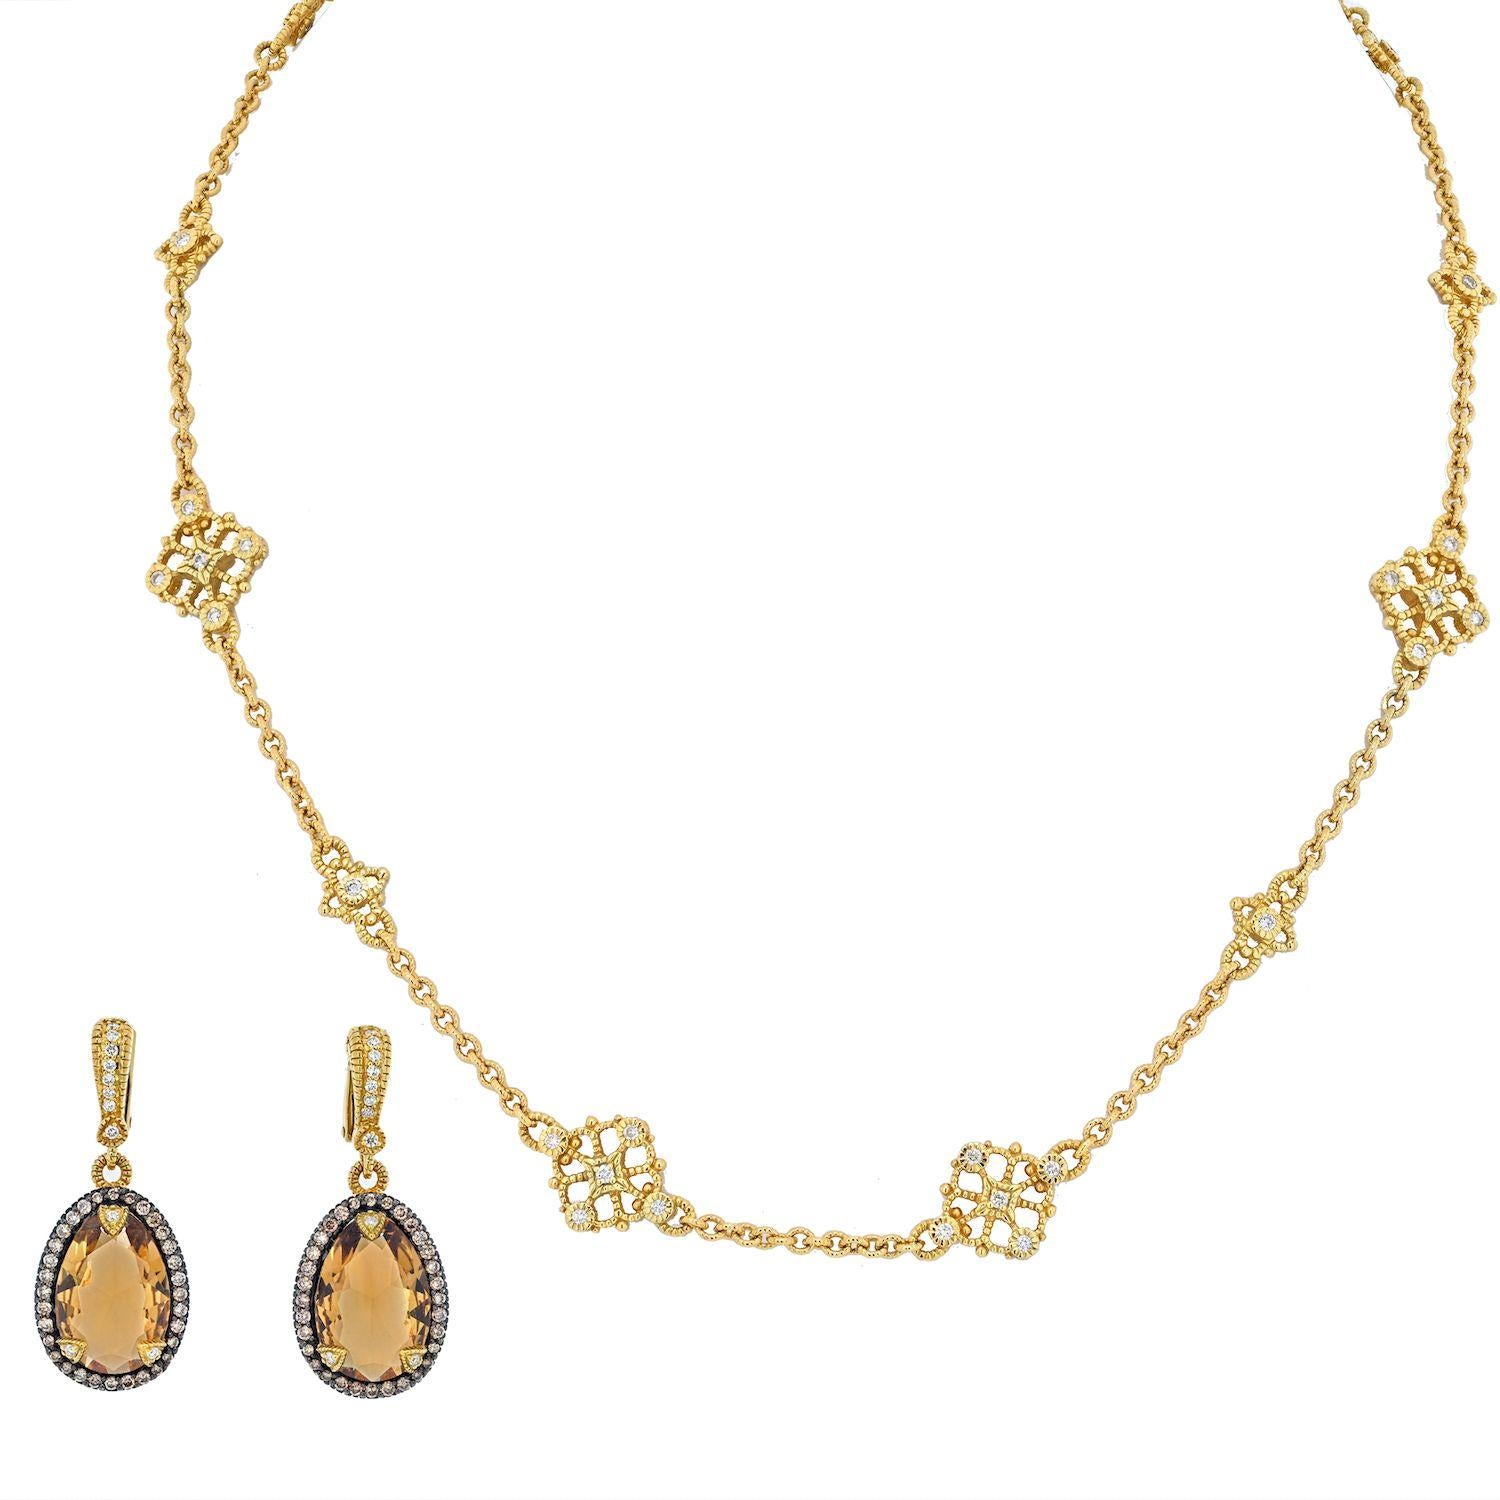 Modern Judith Ripka 18K Yellow Gold Necklace & Earrings Jewelry Set